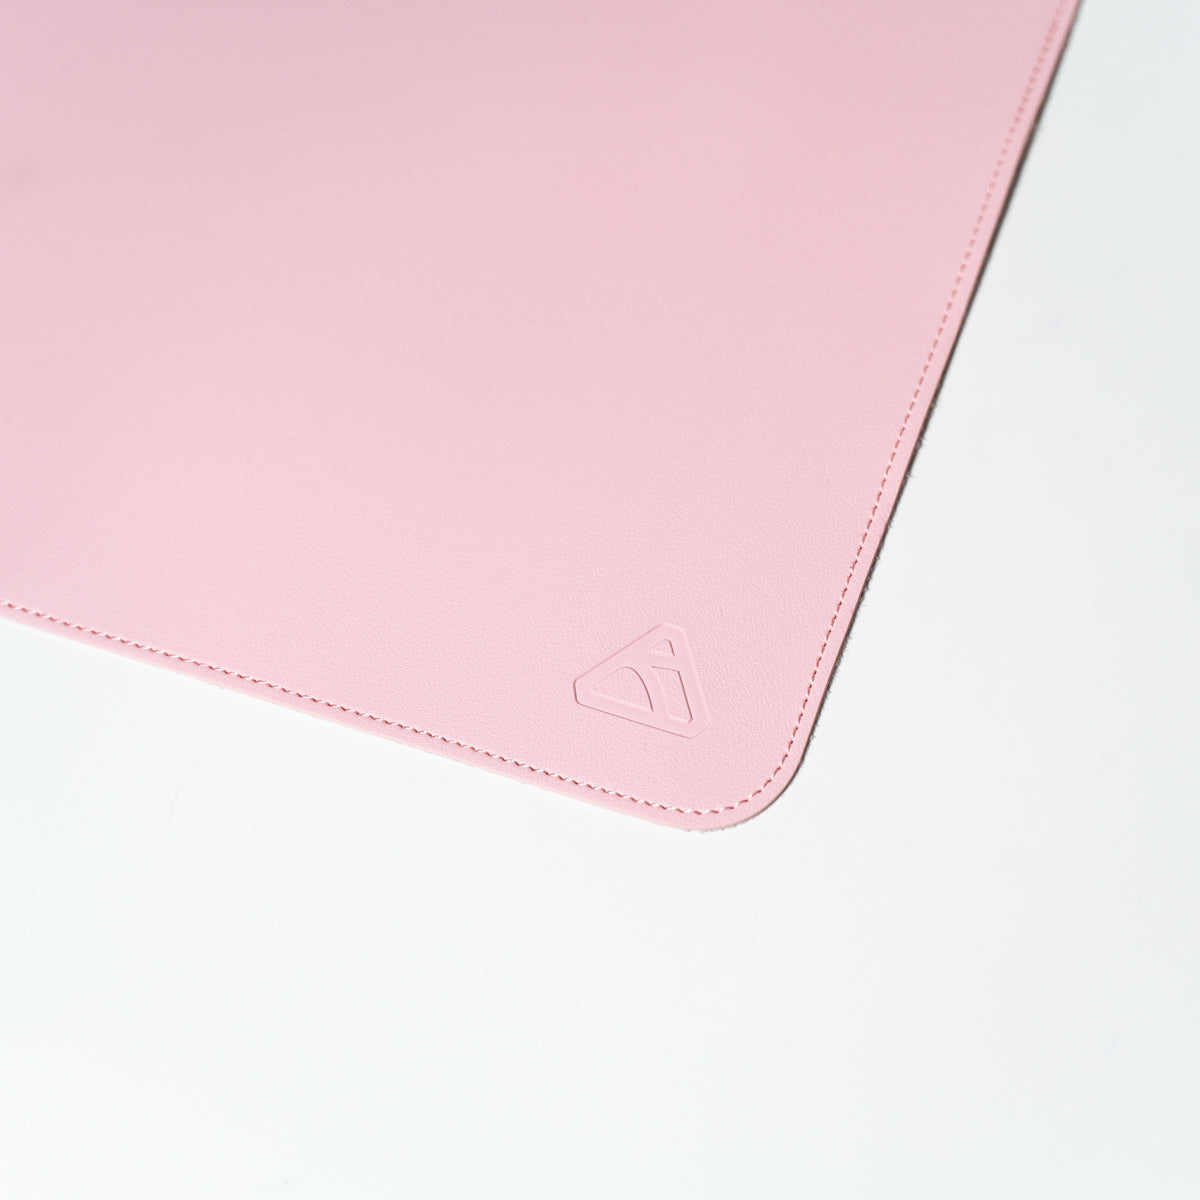 Pink leather desk mat with Ryskape logo